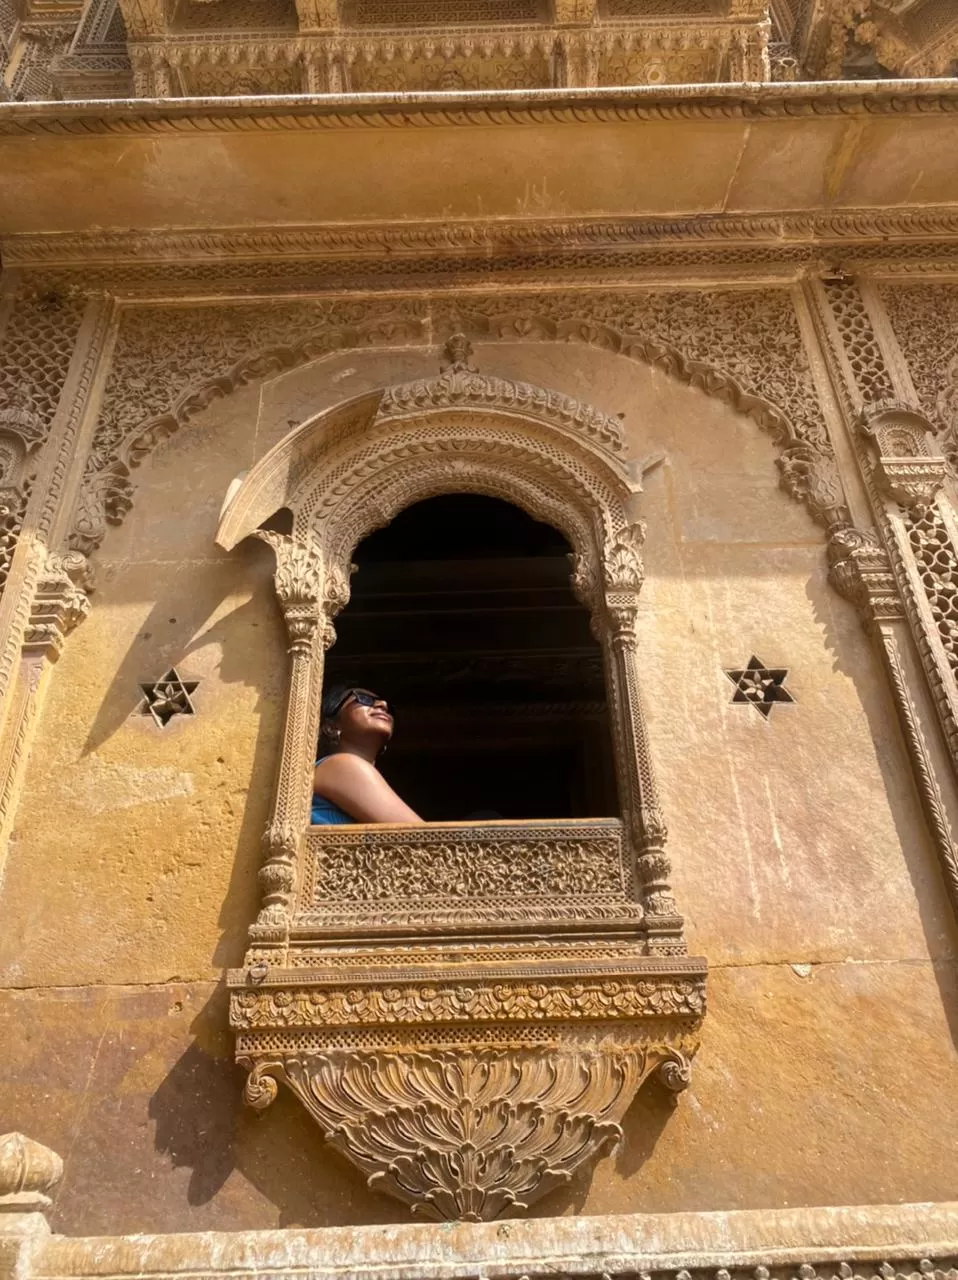 Photo of Guide to visit Jodhpur & Jaisalmer in 4 days by Aiswarya Krishnan